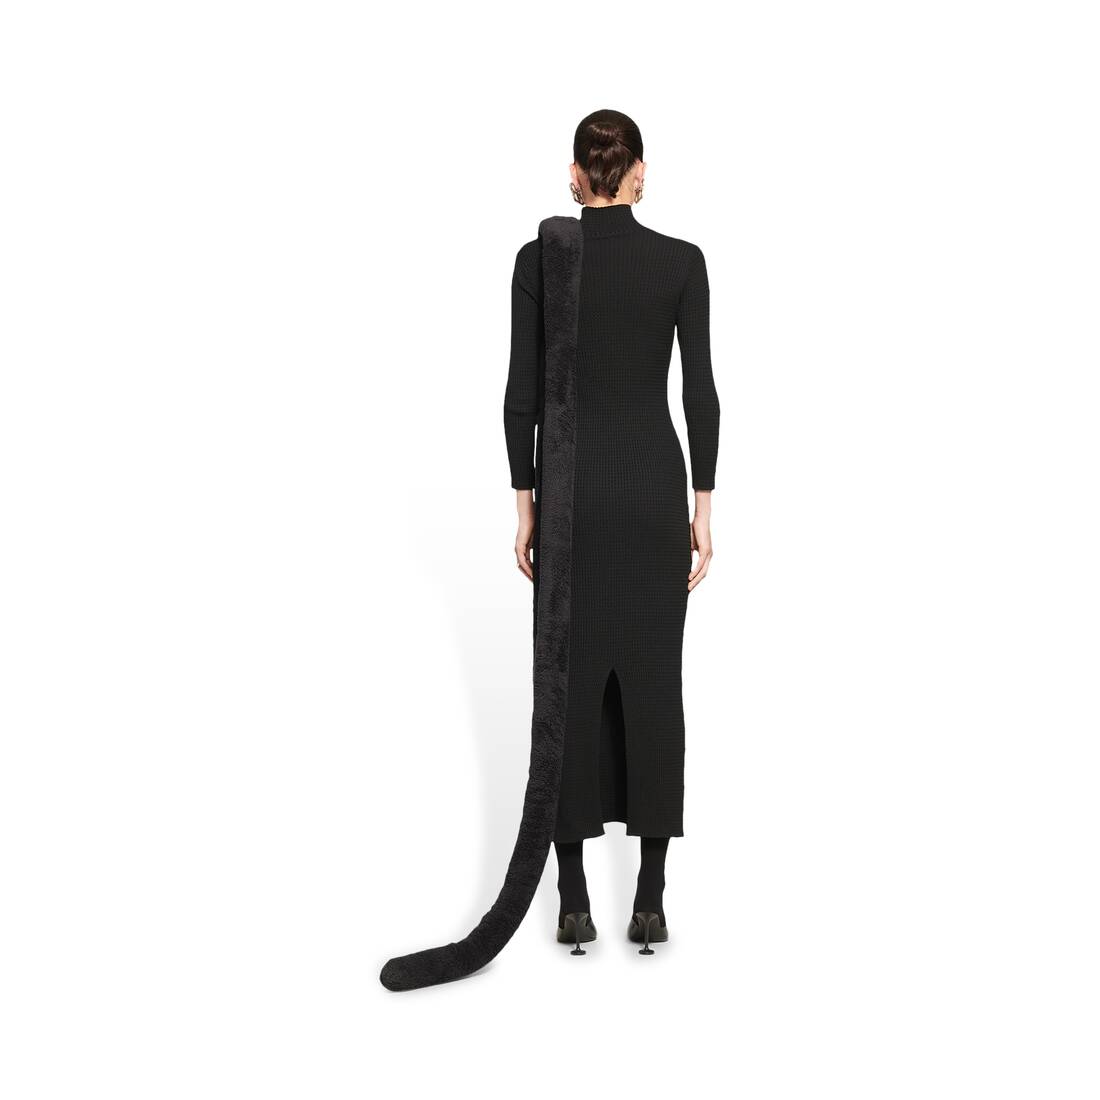 Women's Fitted Dress in Black